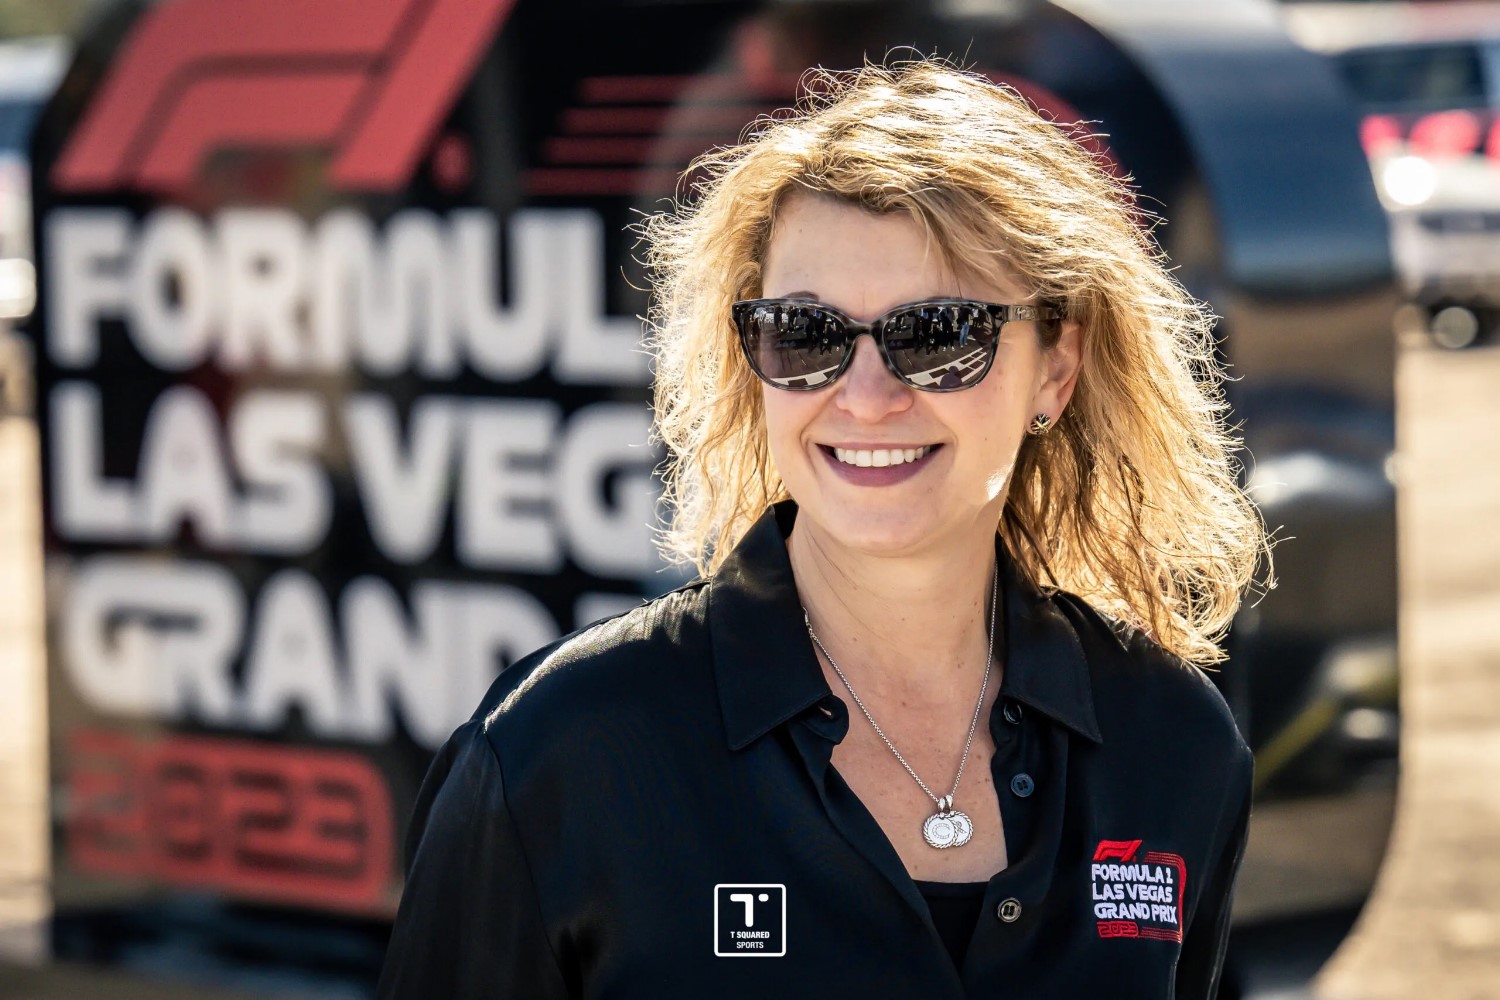 Renee Wilm, CEO of the Las Vegas Grand Prix